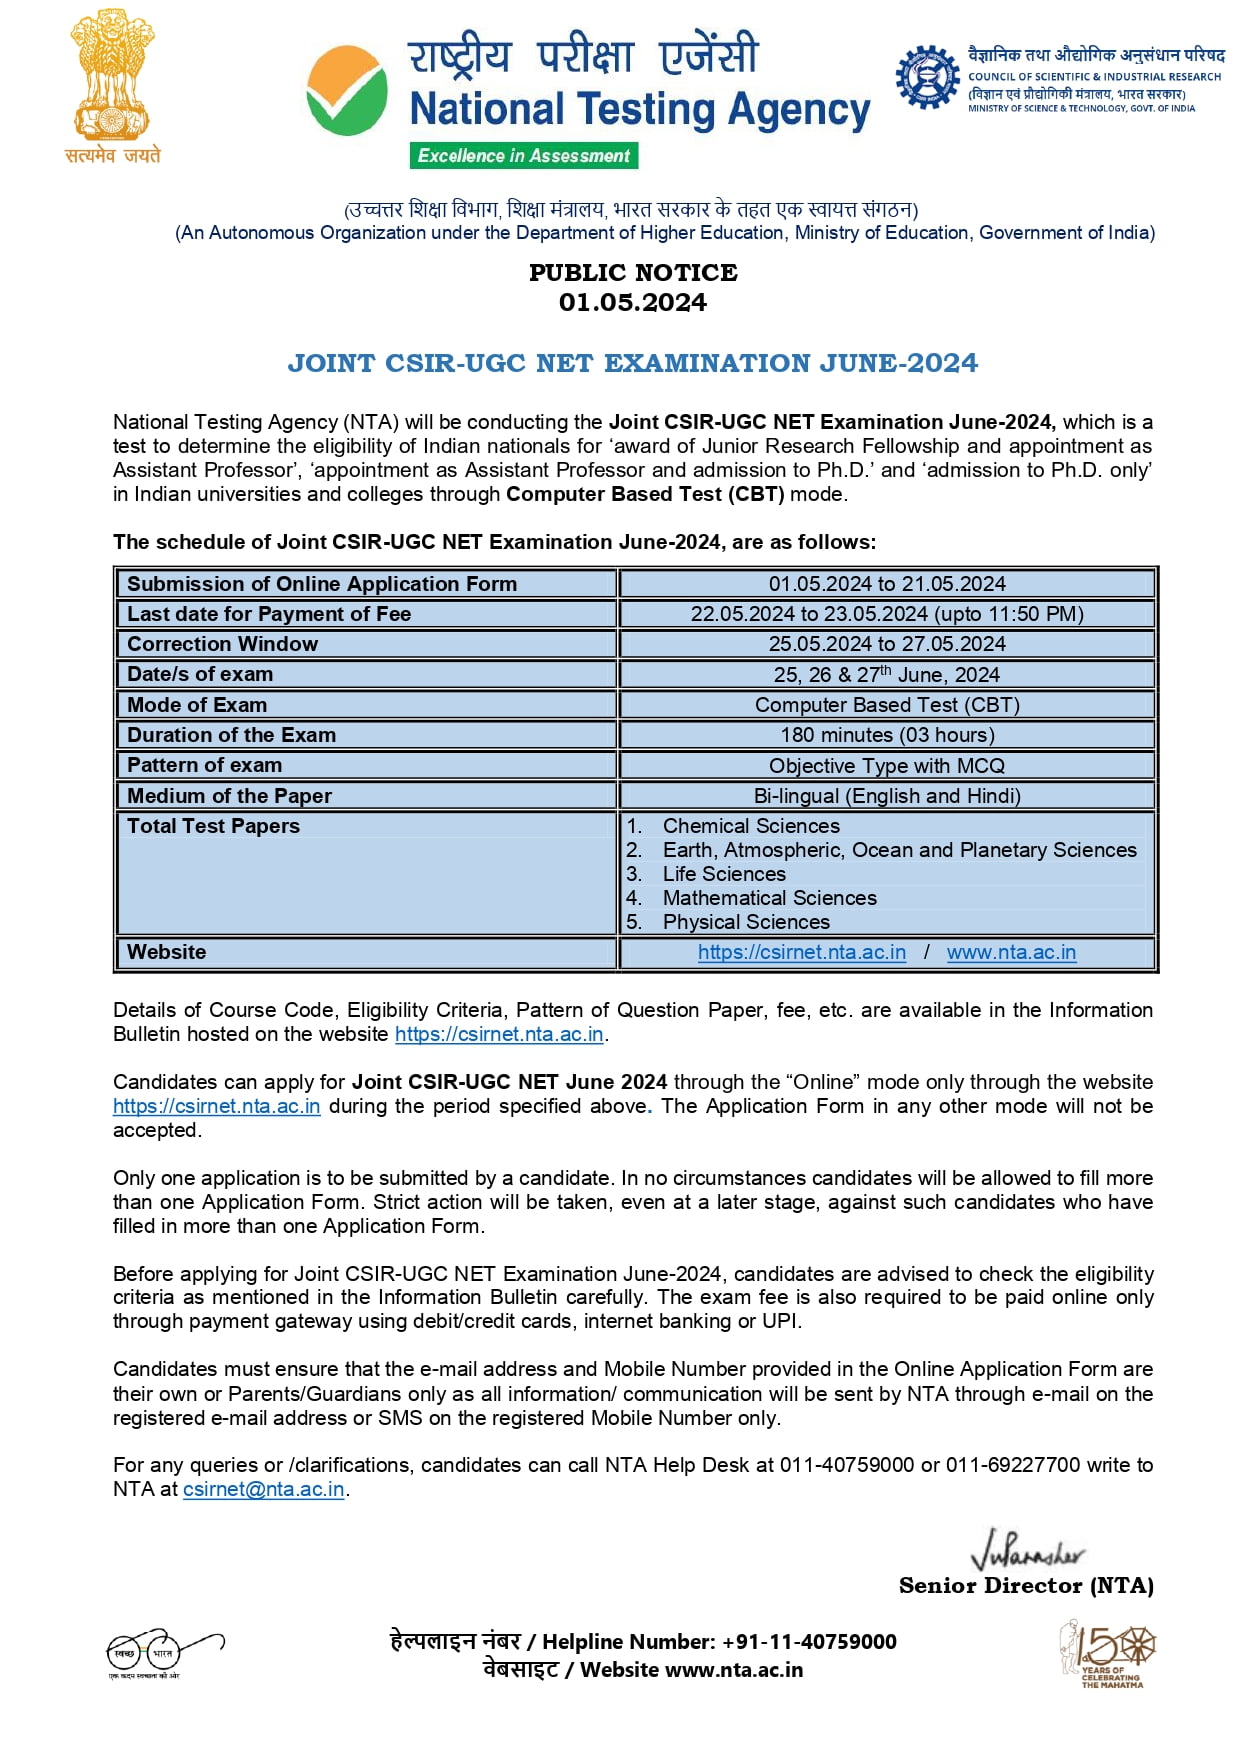 CSIR-UGC NET June, 2024 Exam